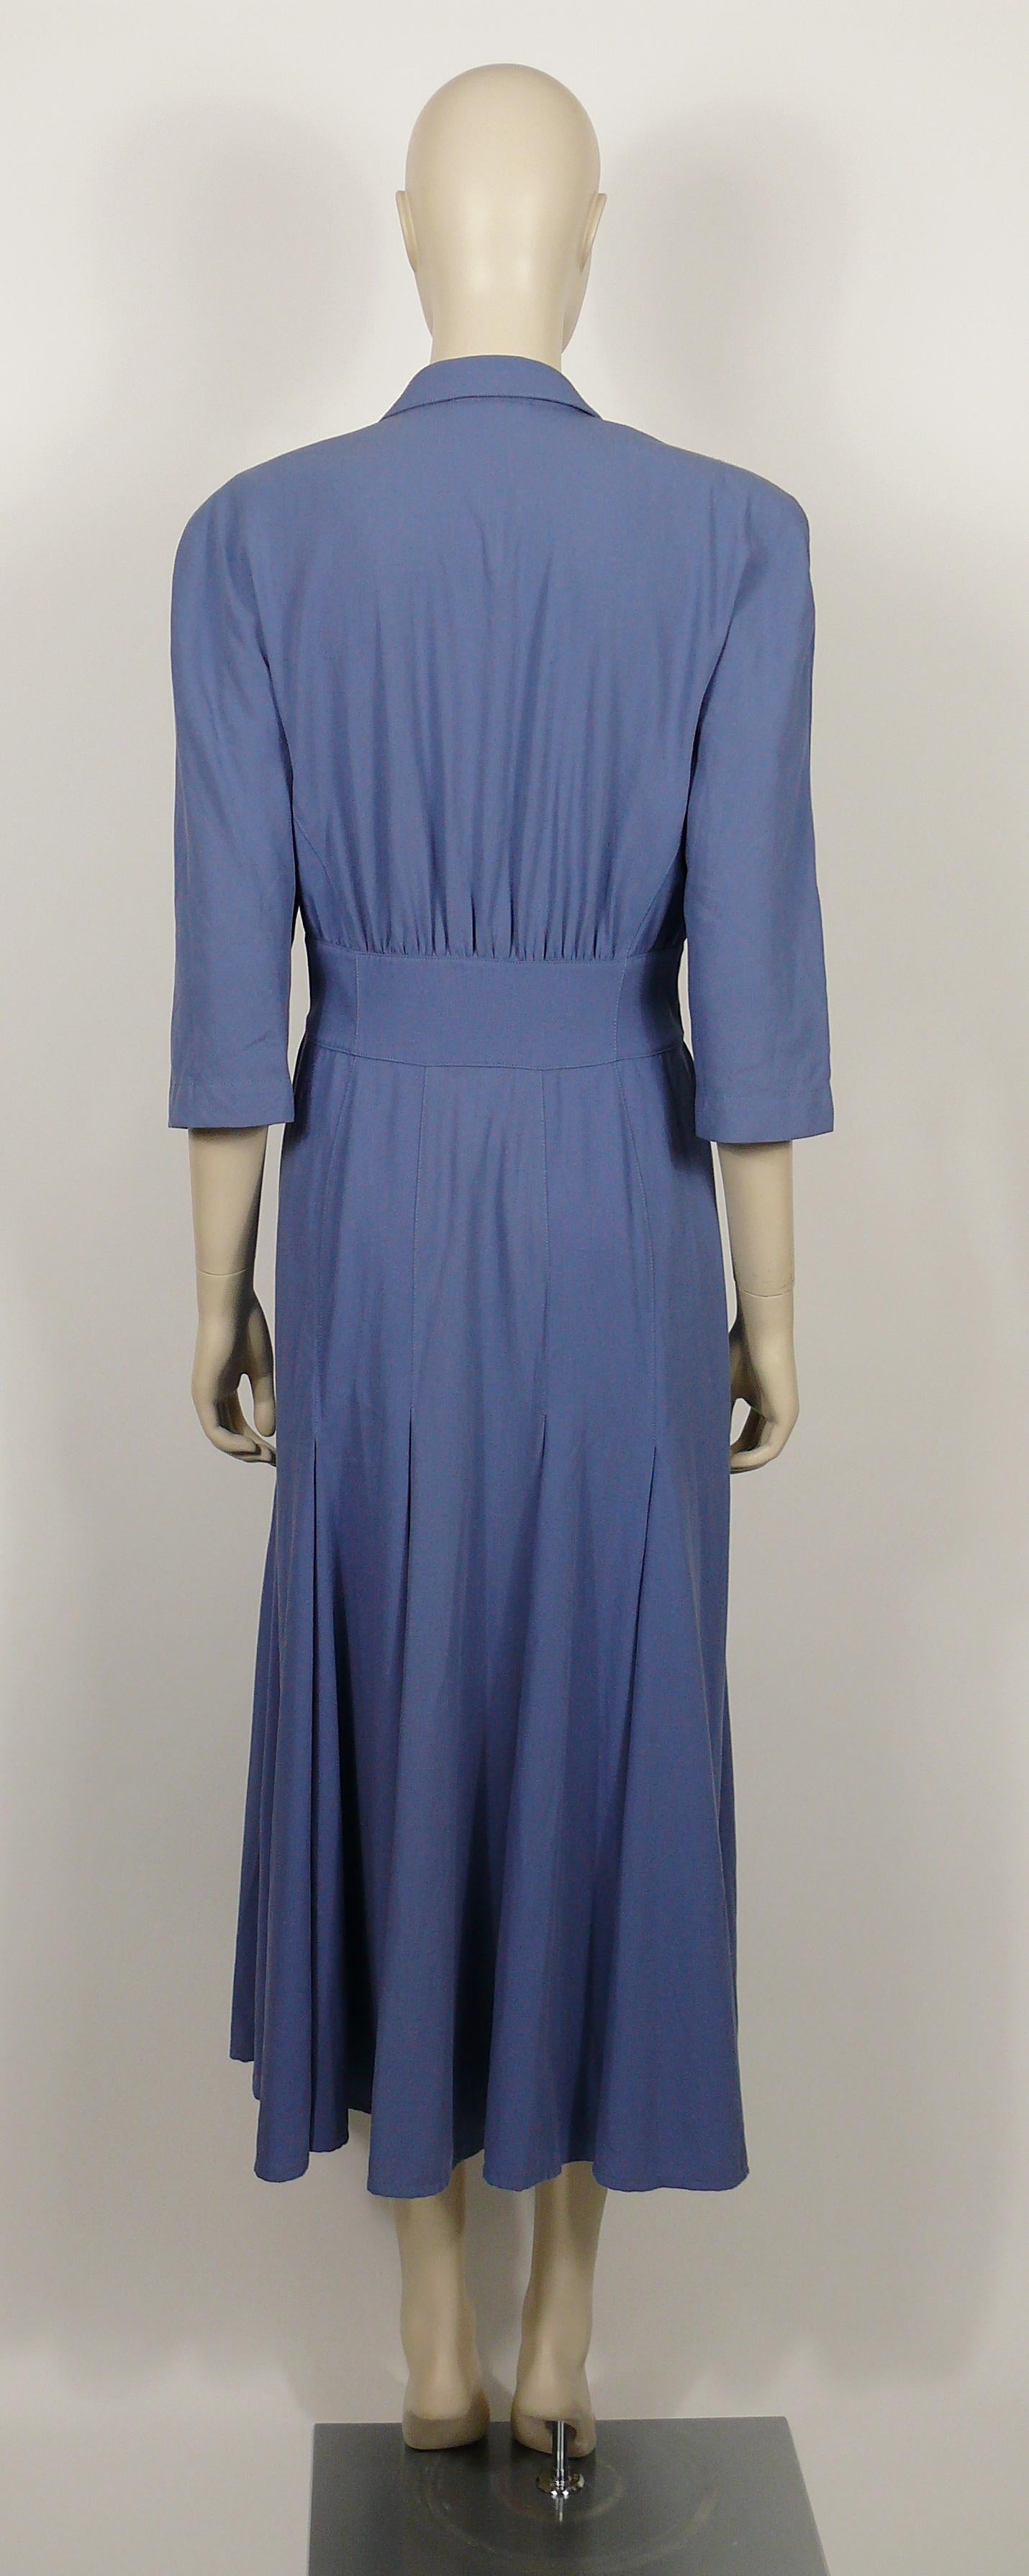 j peterman 1947 dress